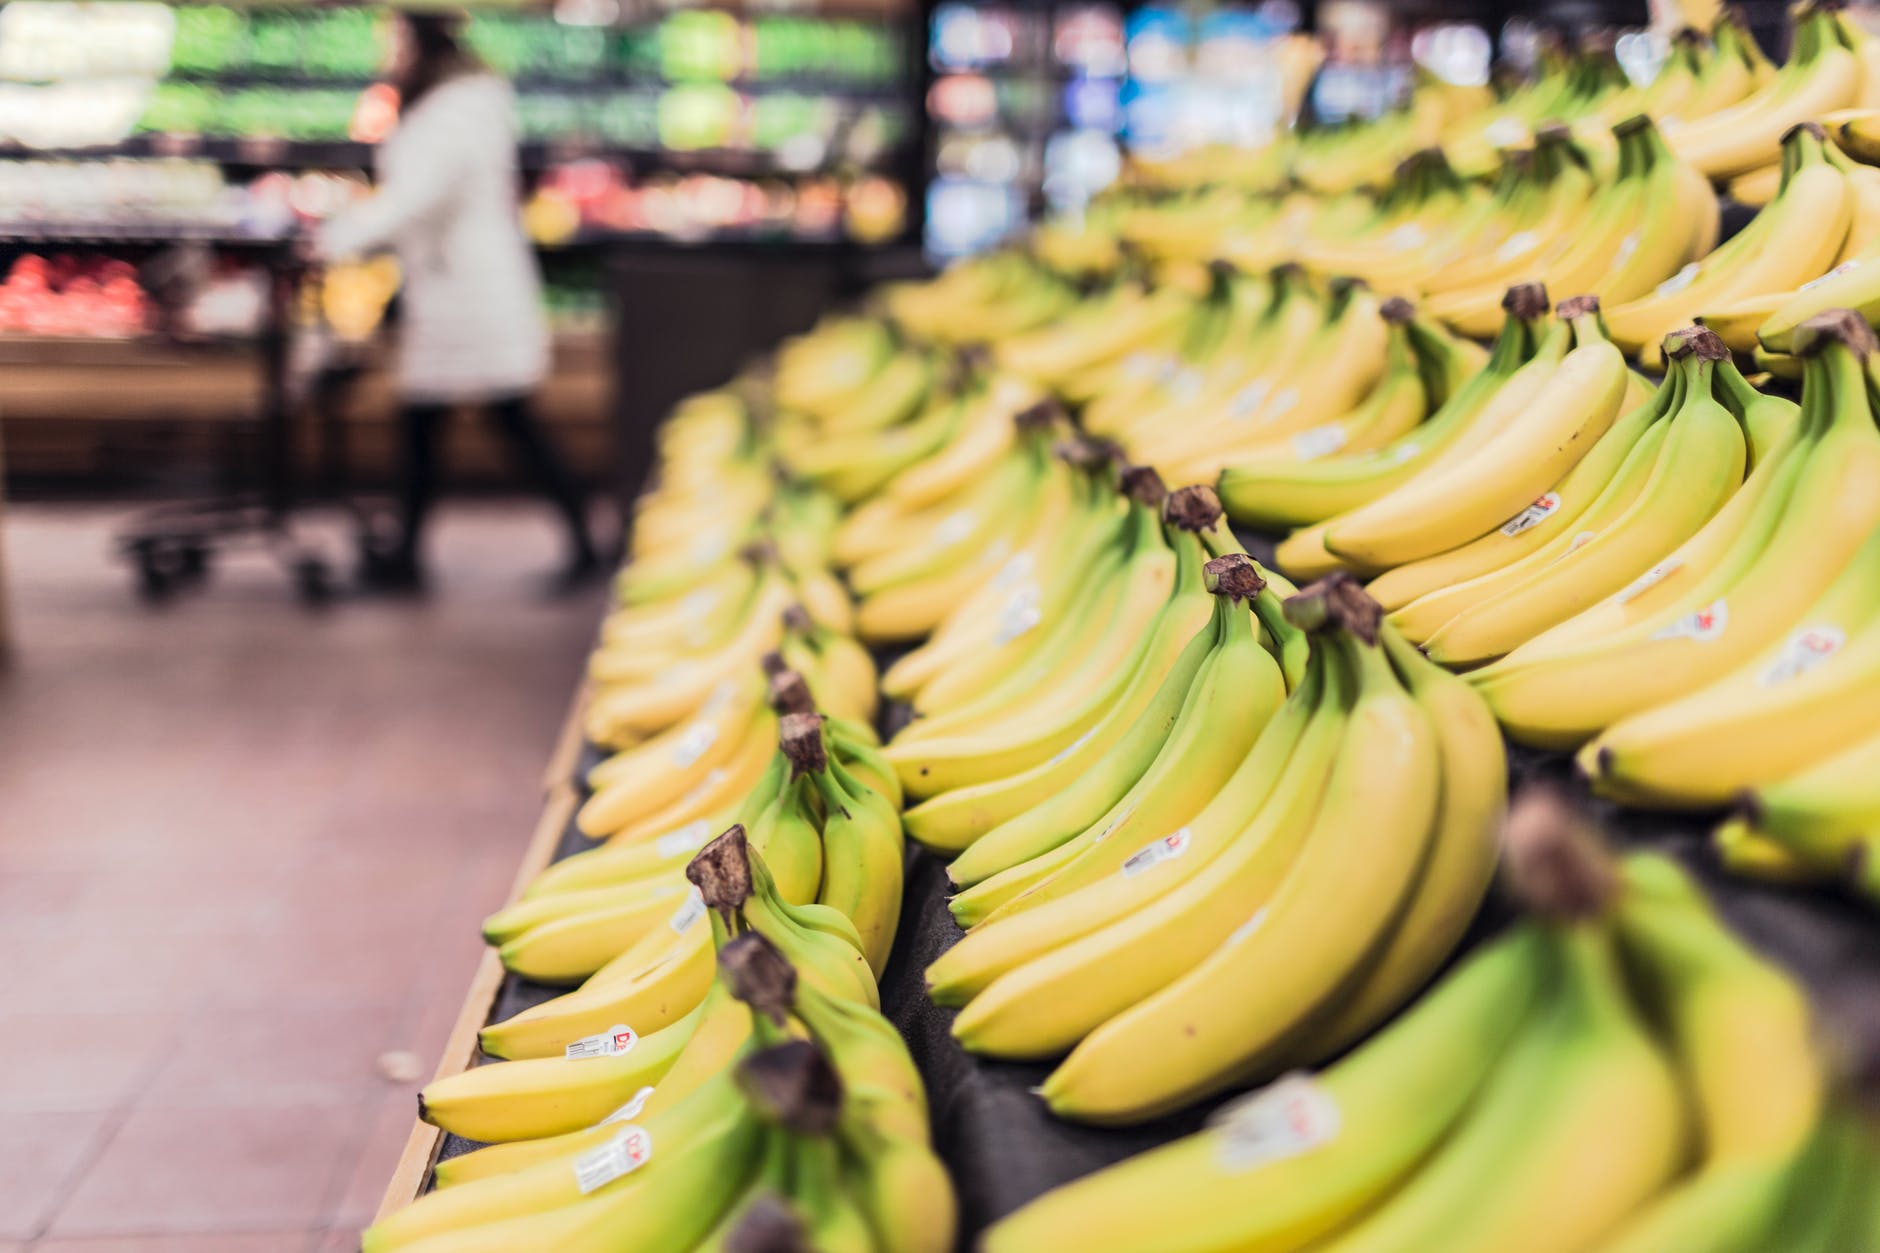 fruits grocery bananas market